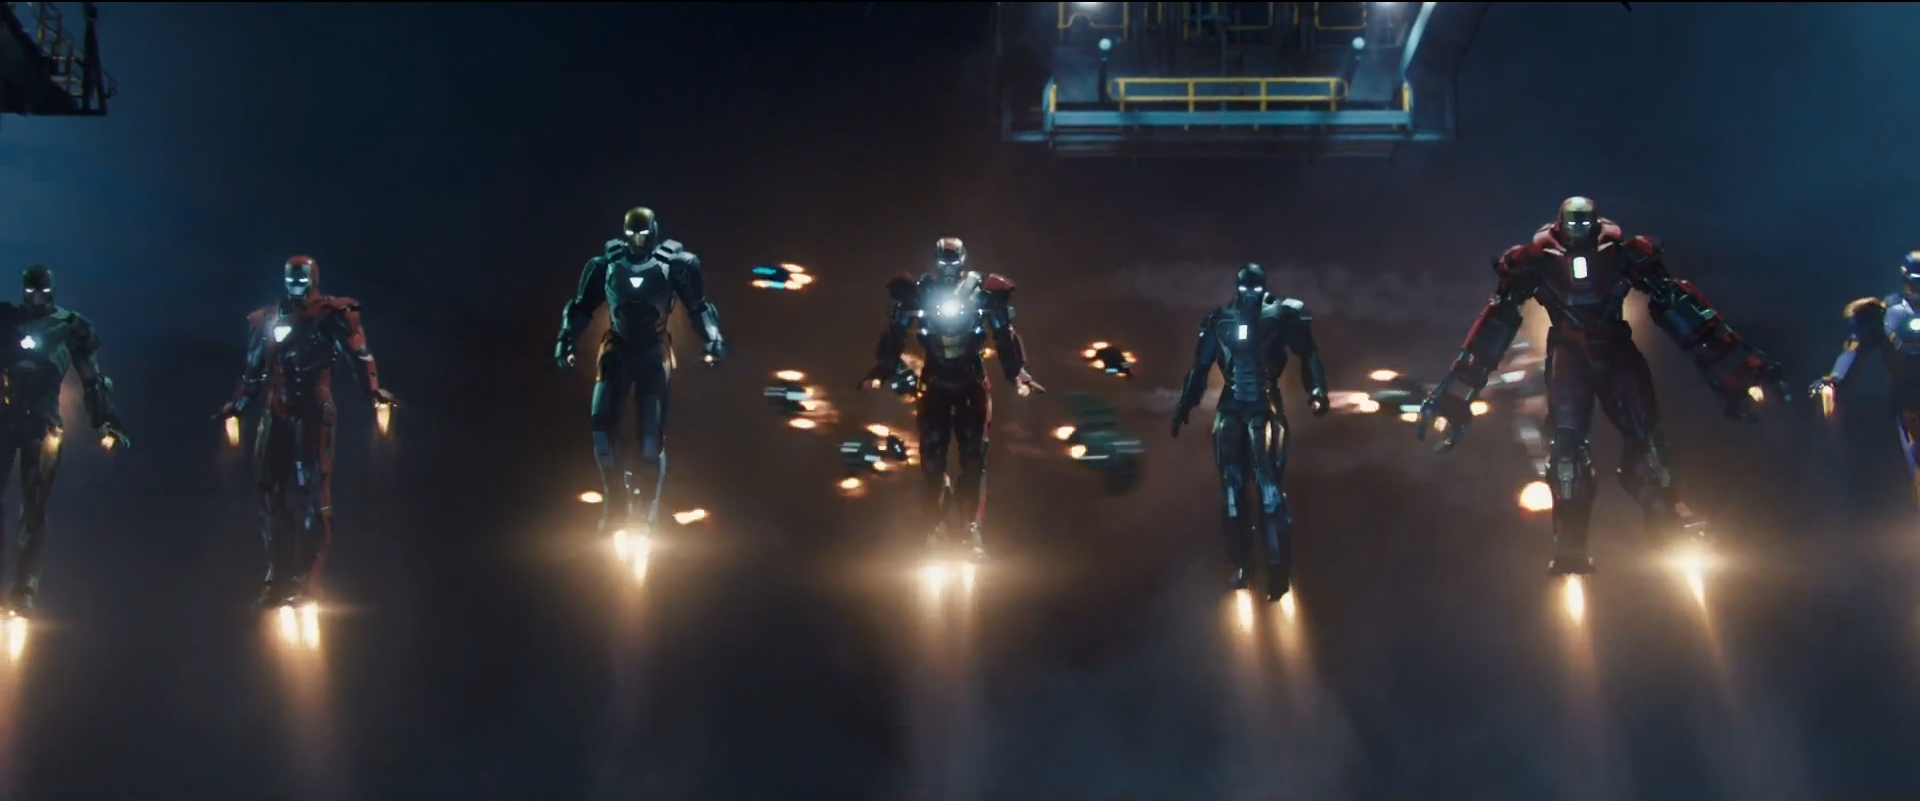 Iron Man 3 (2013) Dvdrip Xd On Xvid- Okidata